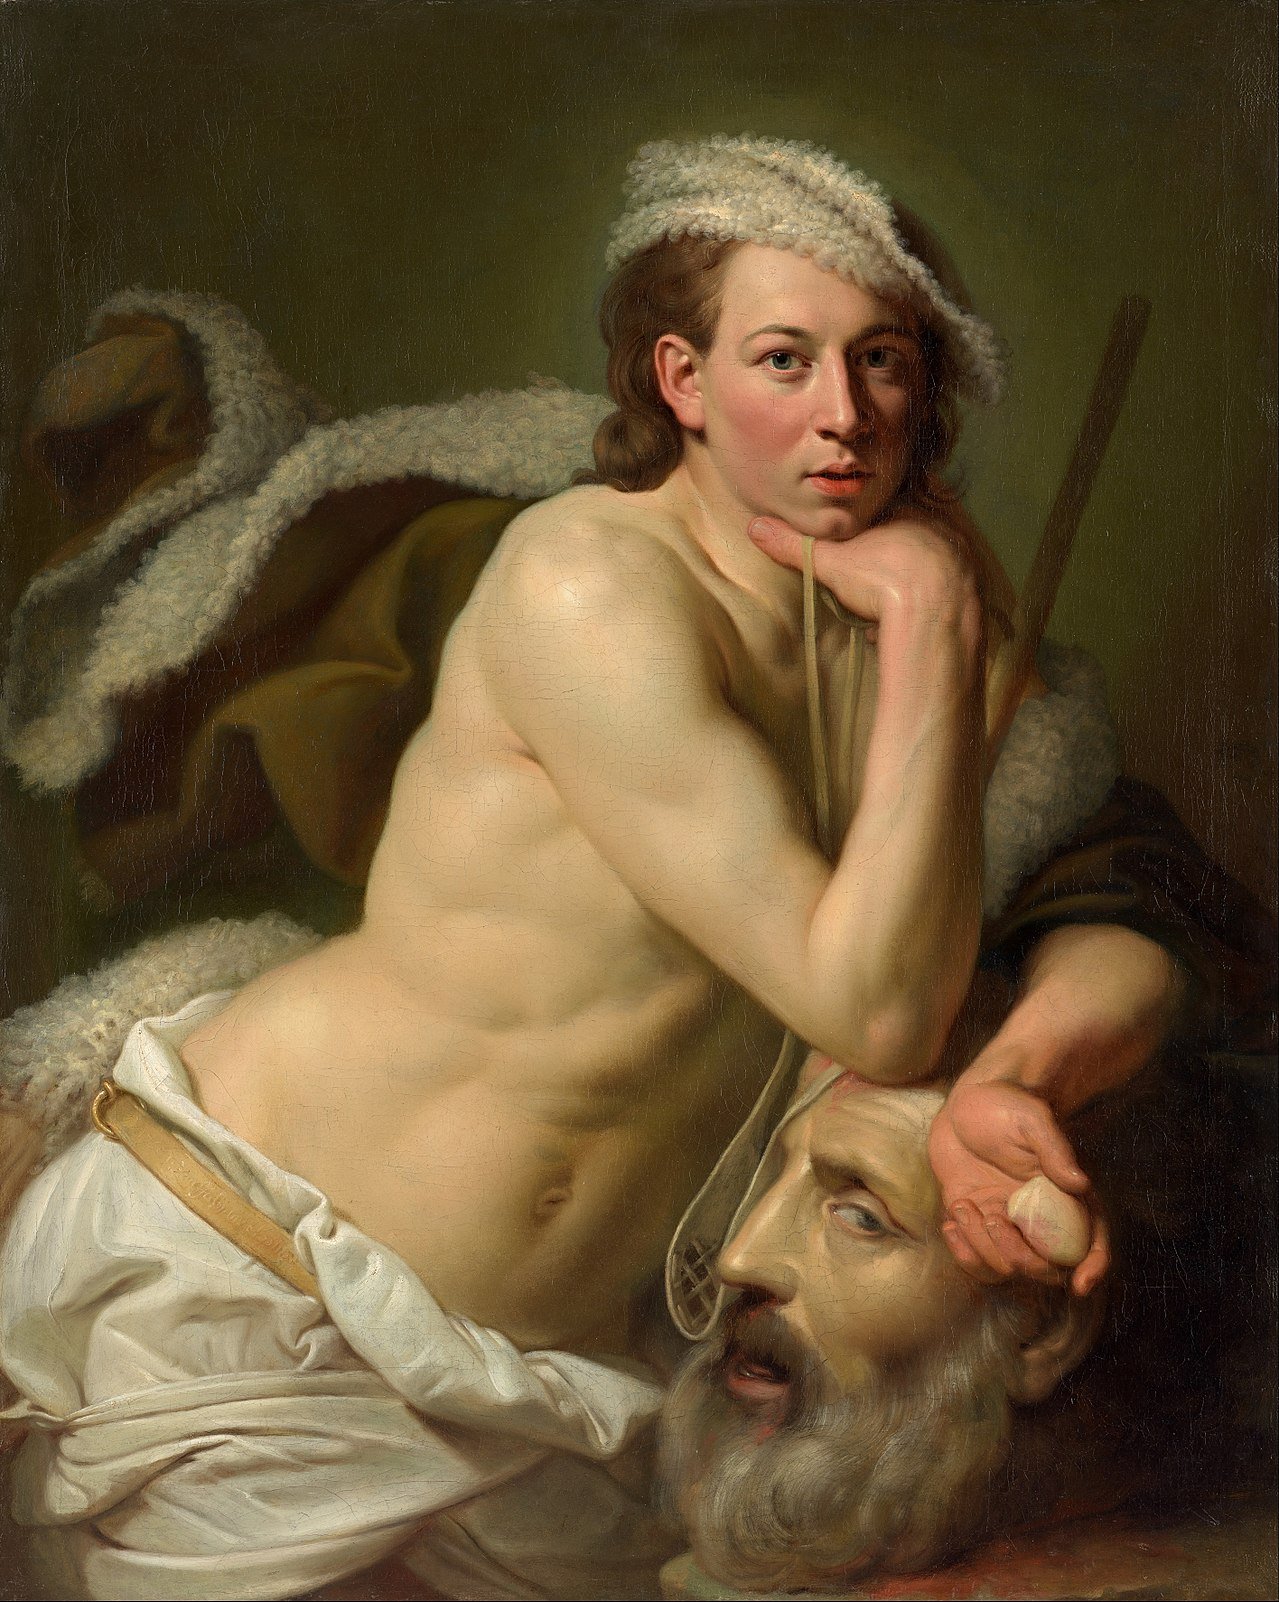 Johan_Zoffany_-_Self-portrait_as_David_with_the_head_of_Goliath_-_Google_Art_Project.jpg